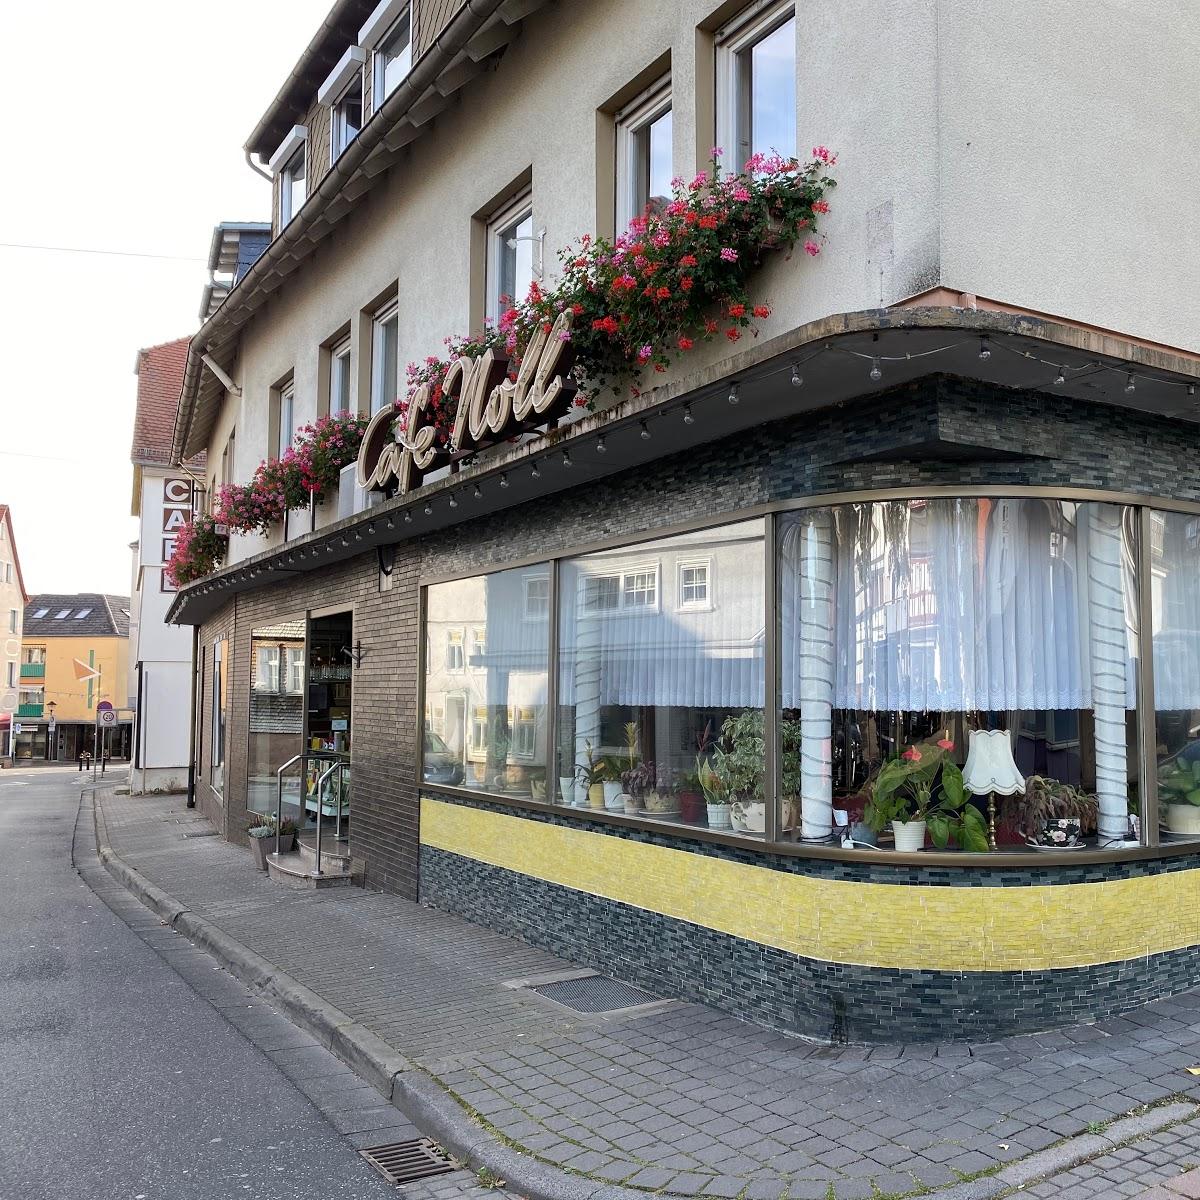 Restaurant "Konditorei Café Oskar Noll in" in Kirchhain